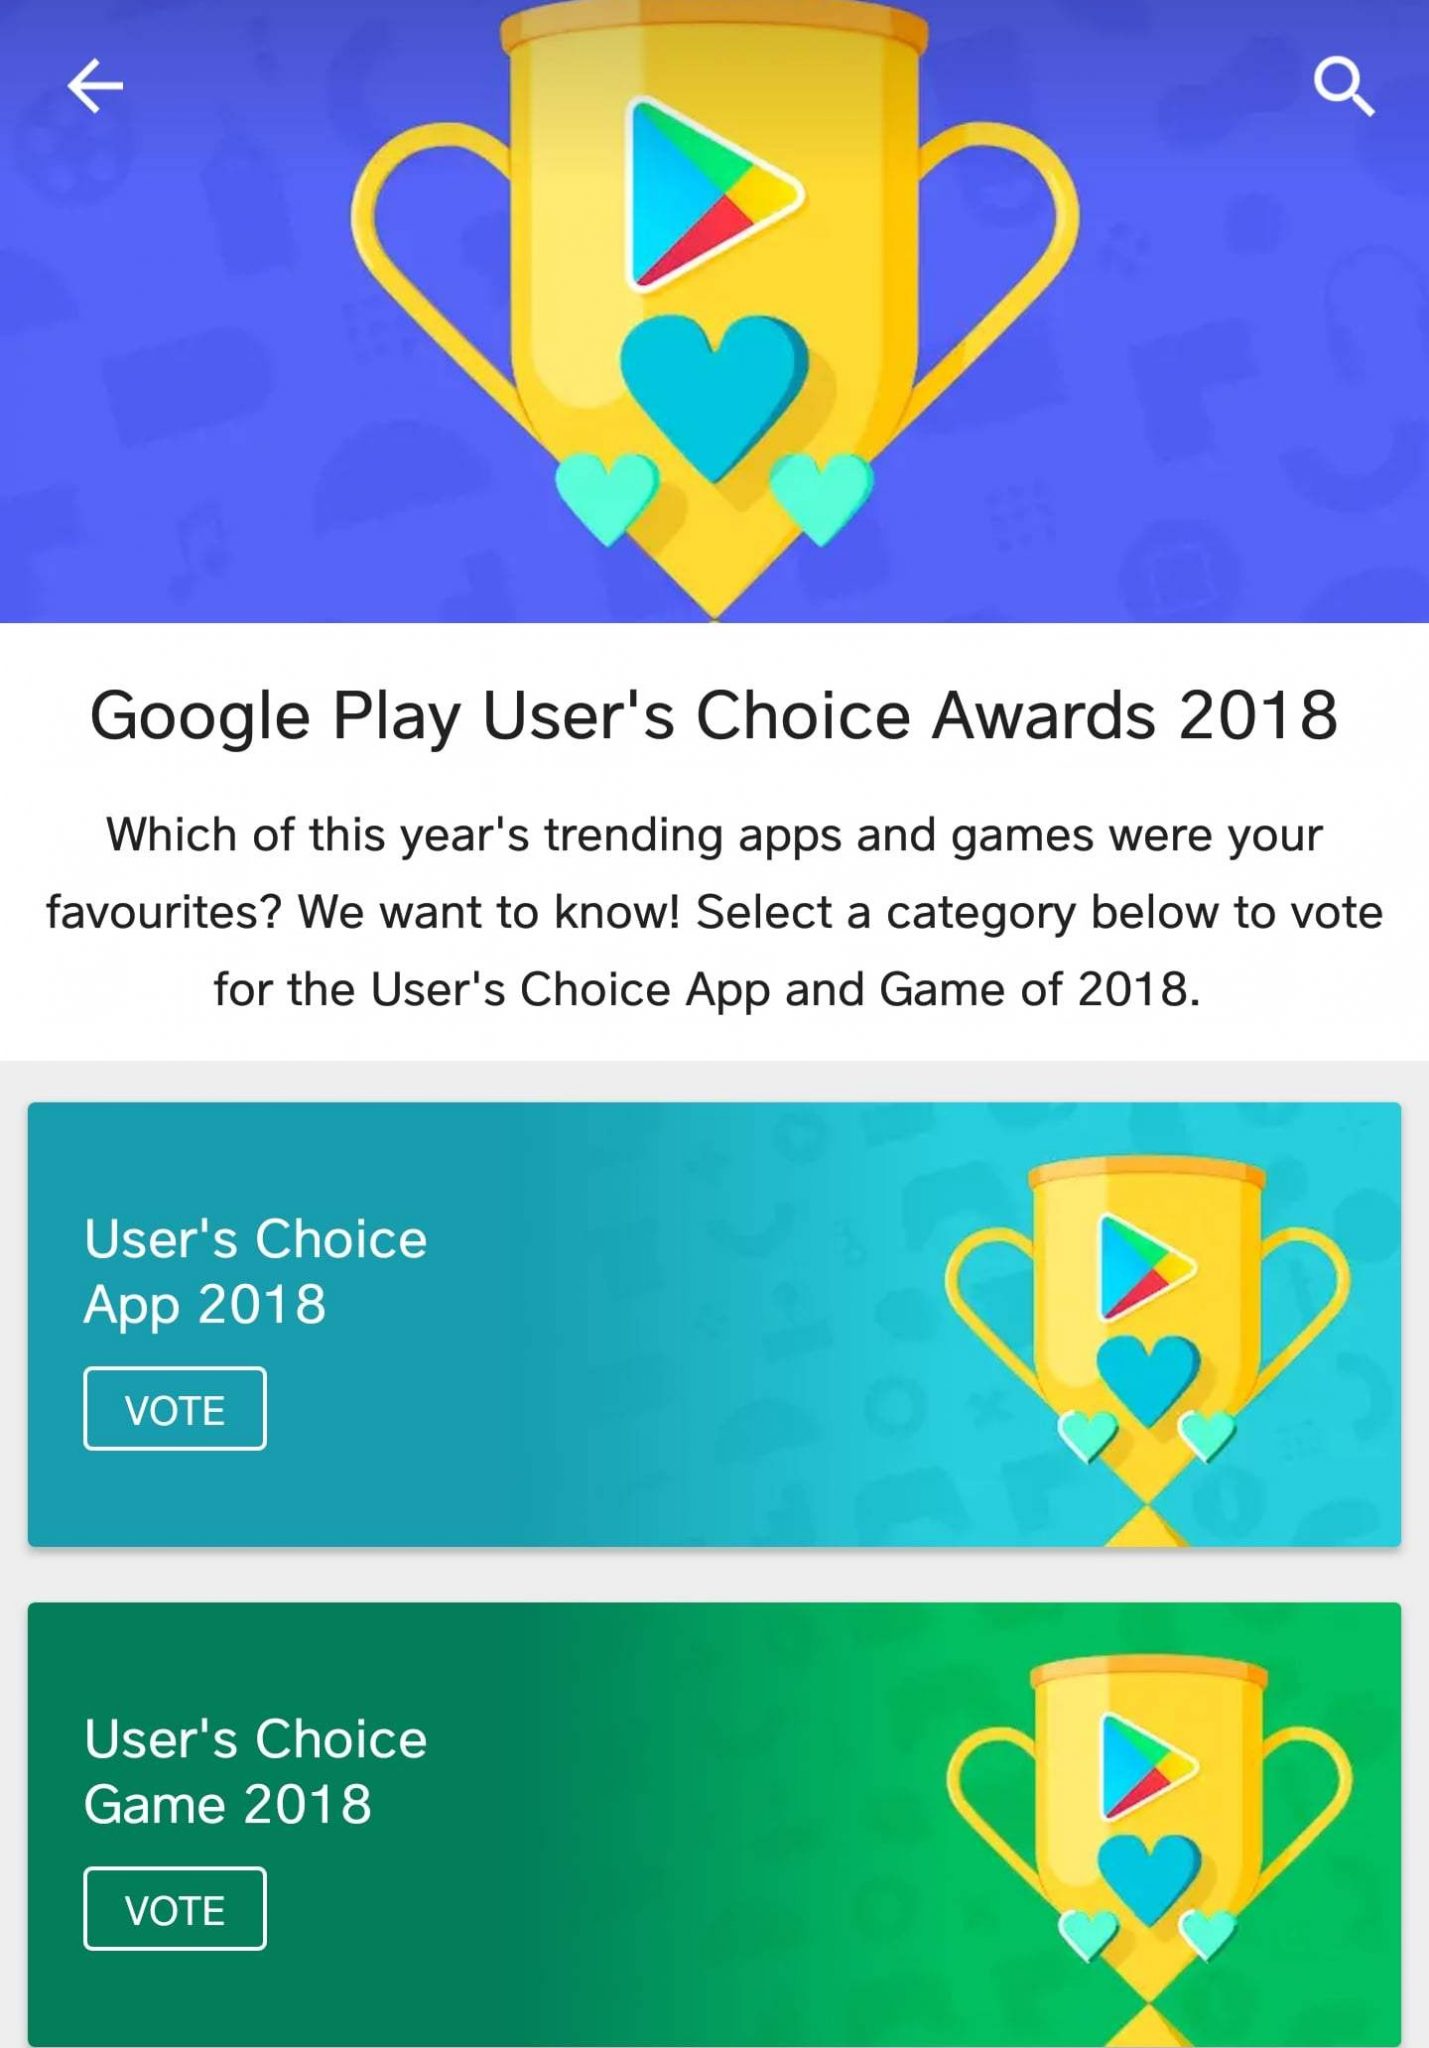 Google Play User's Choice Awards 2018